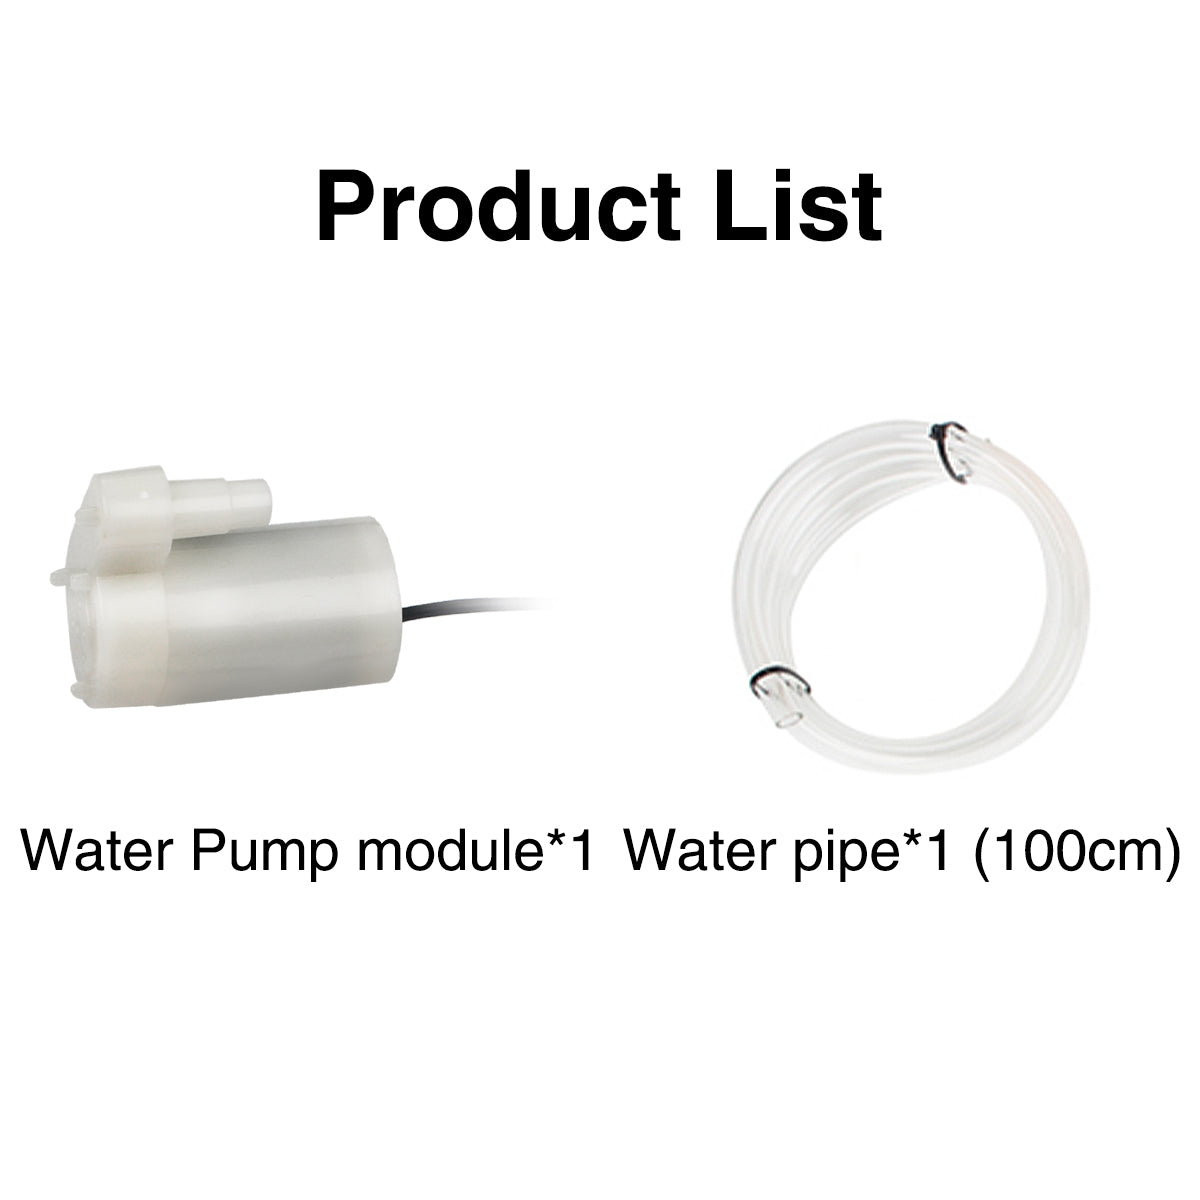 Hiwonder Water Pump Module Compatible with Arduino/ micro:bit/ Raspberry Pi